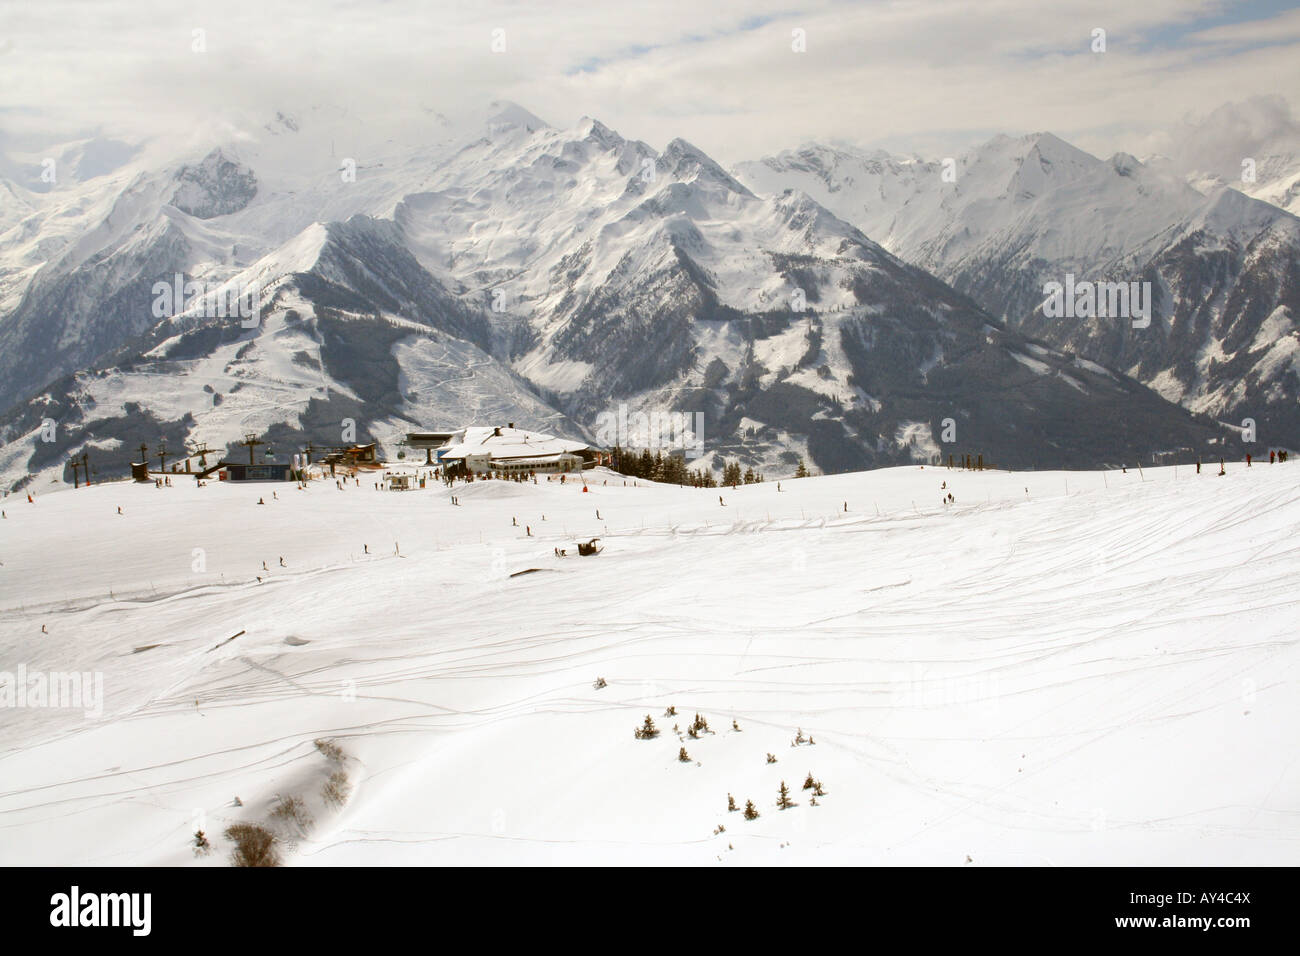 Swiss Alps mountainous landscape, Crans-Montana ski resort, Switzerland. Stock Photo